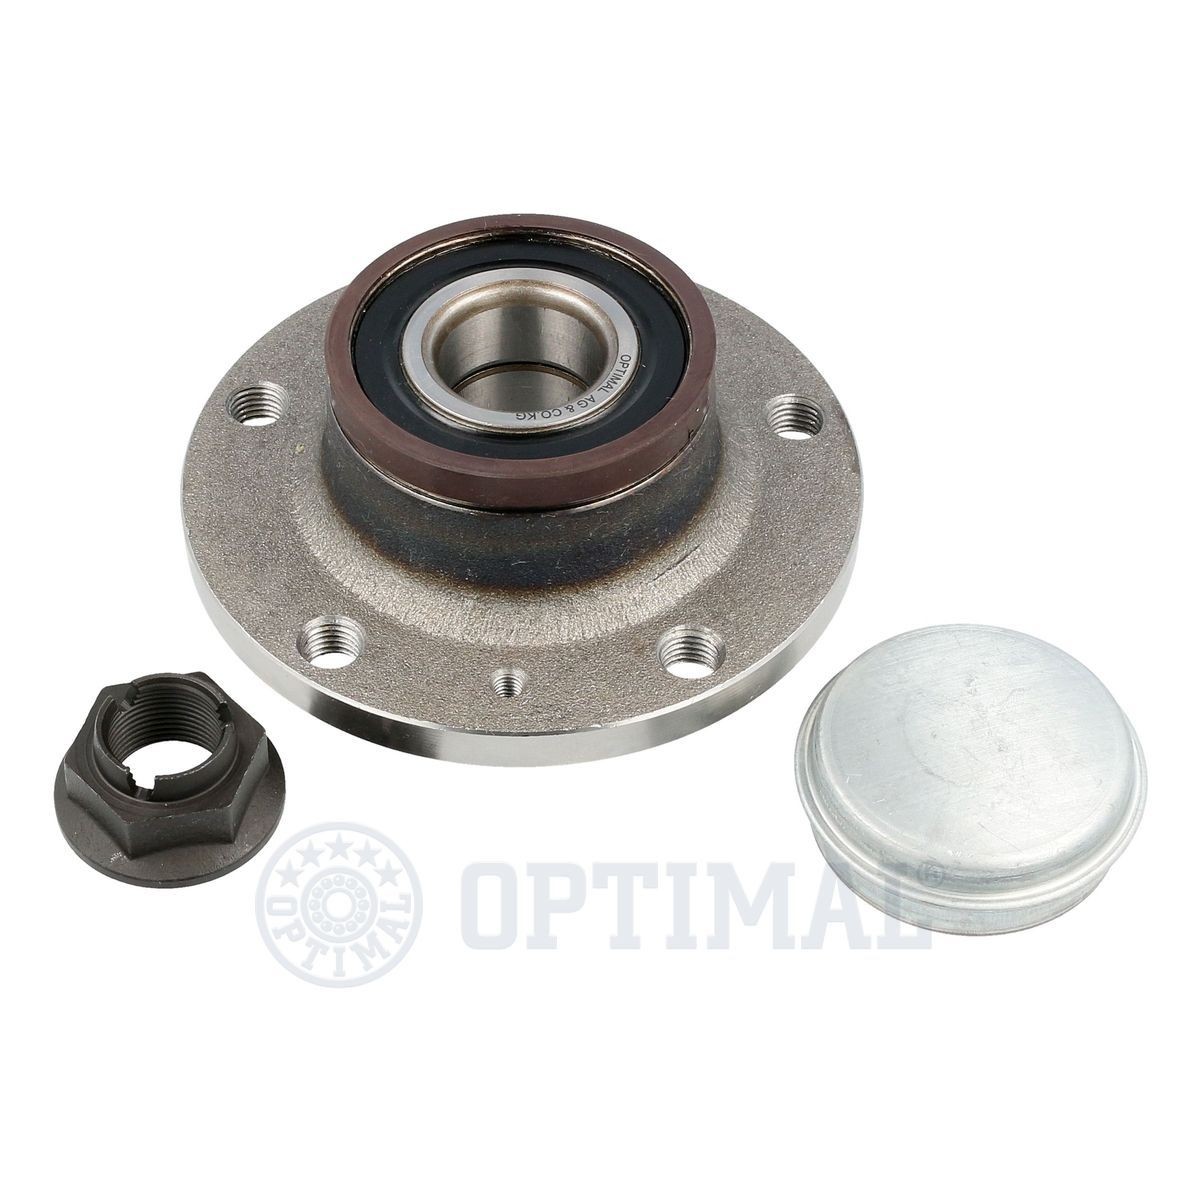 OPTIMAL 202286 Wheel bearing kit with integrated magnetic sensor ring, 130 mm